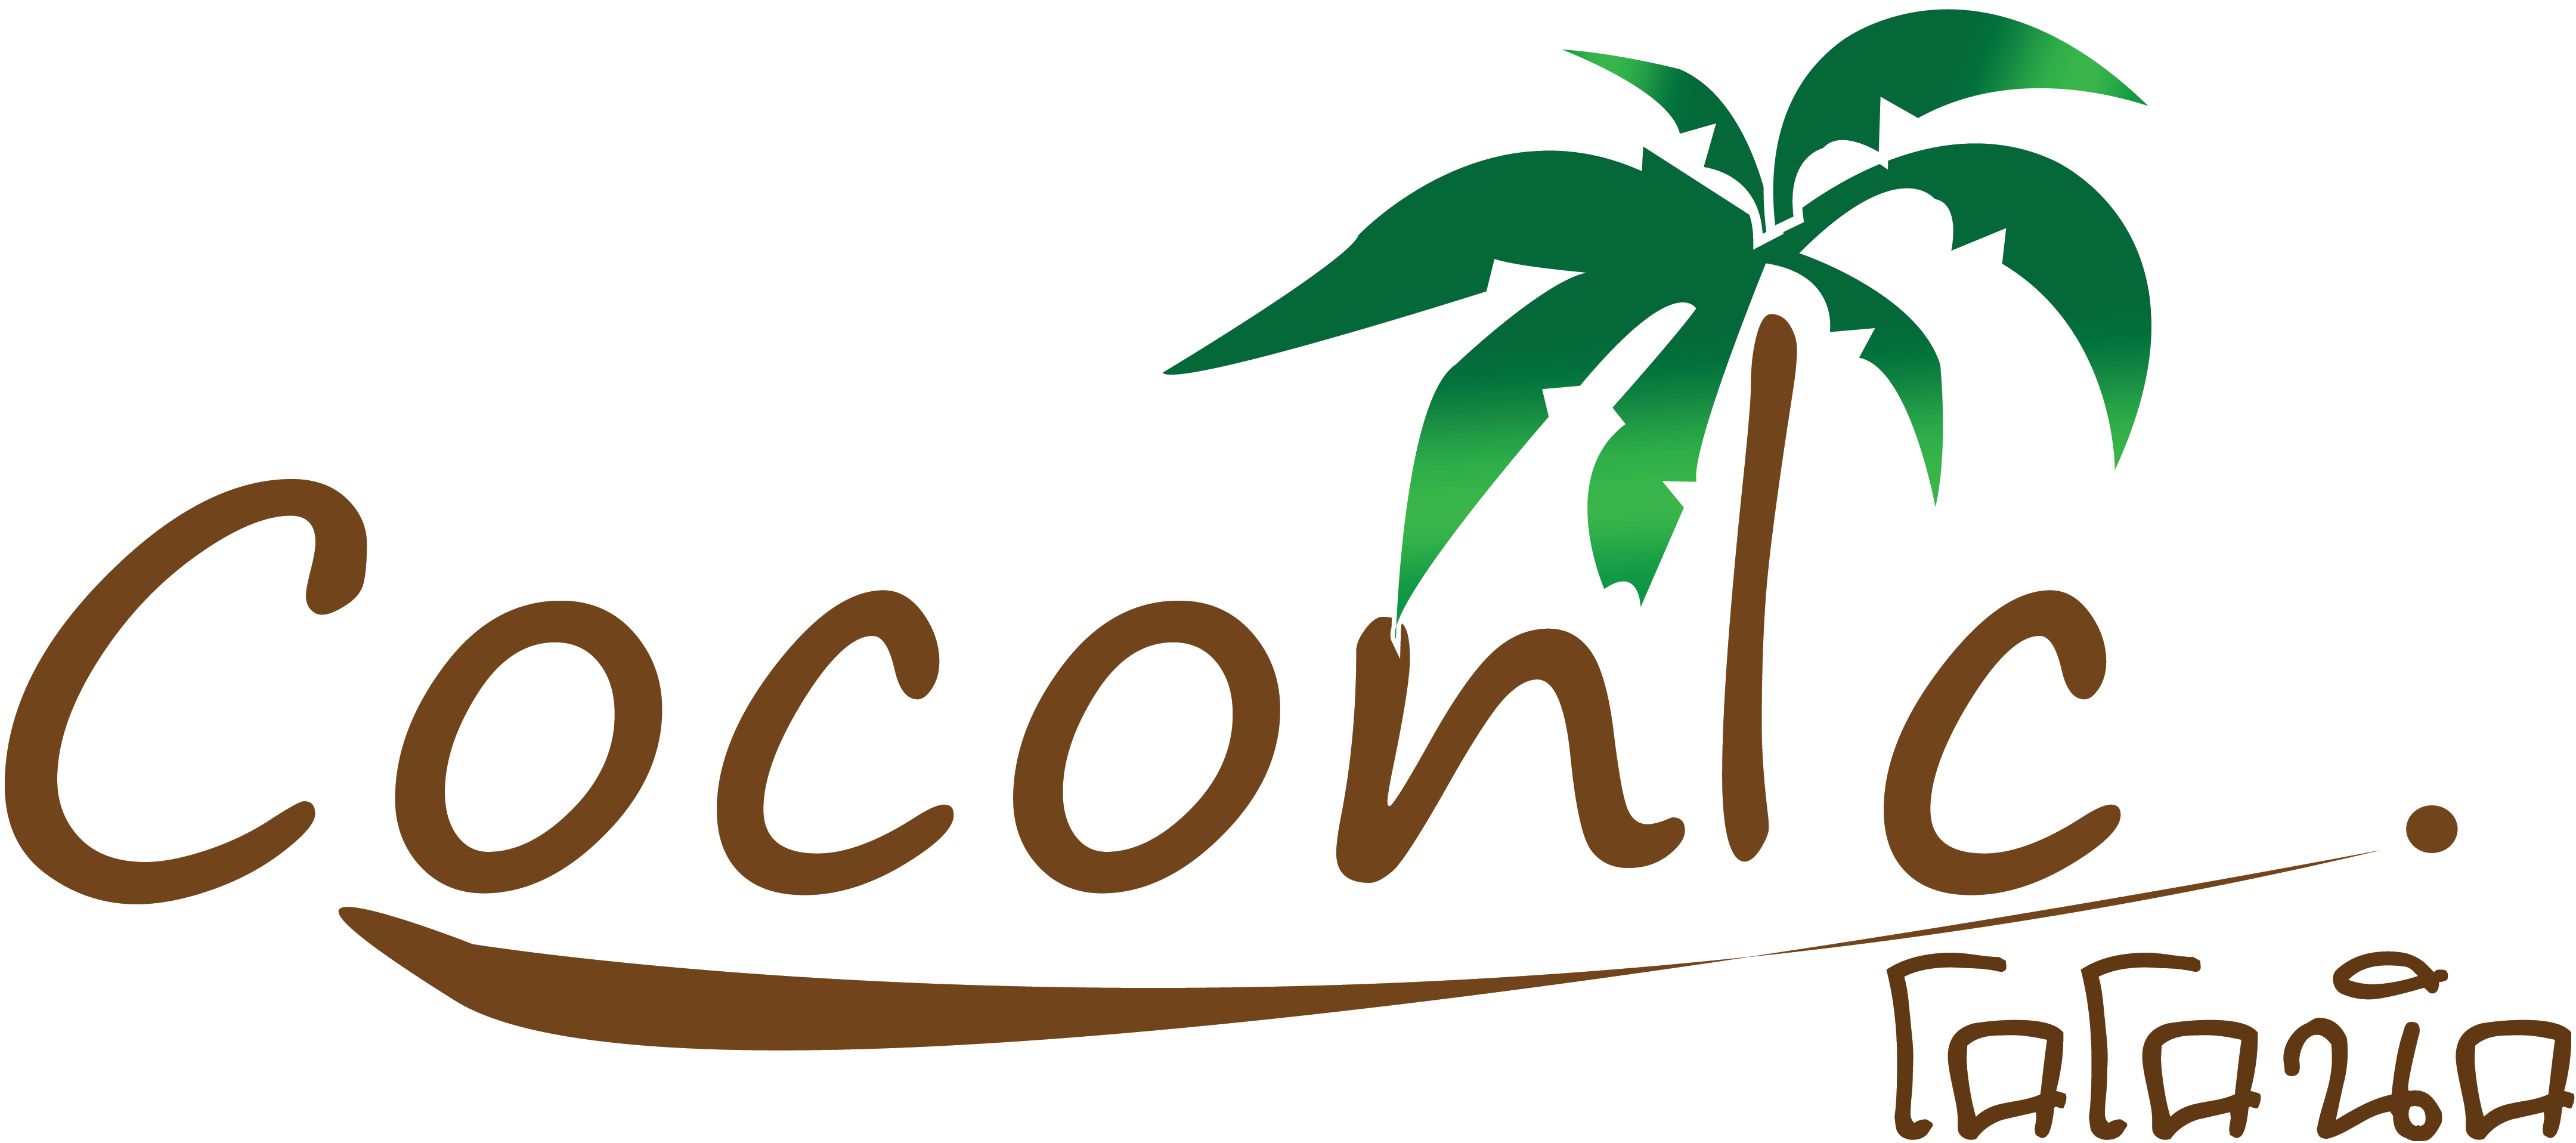 Coconut Coconic